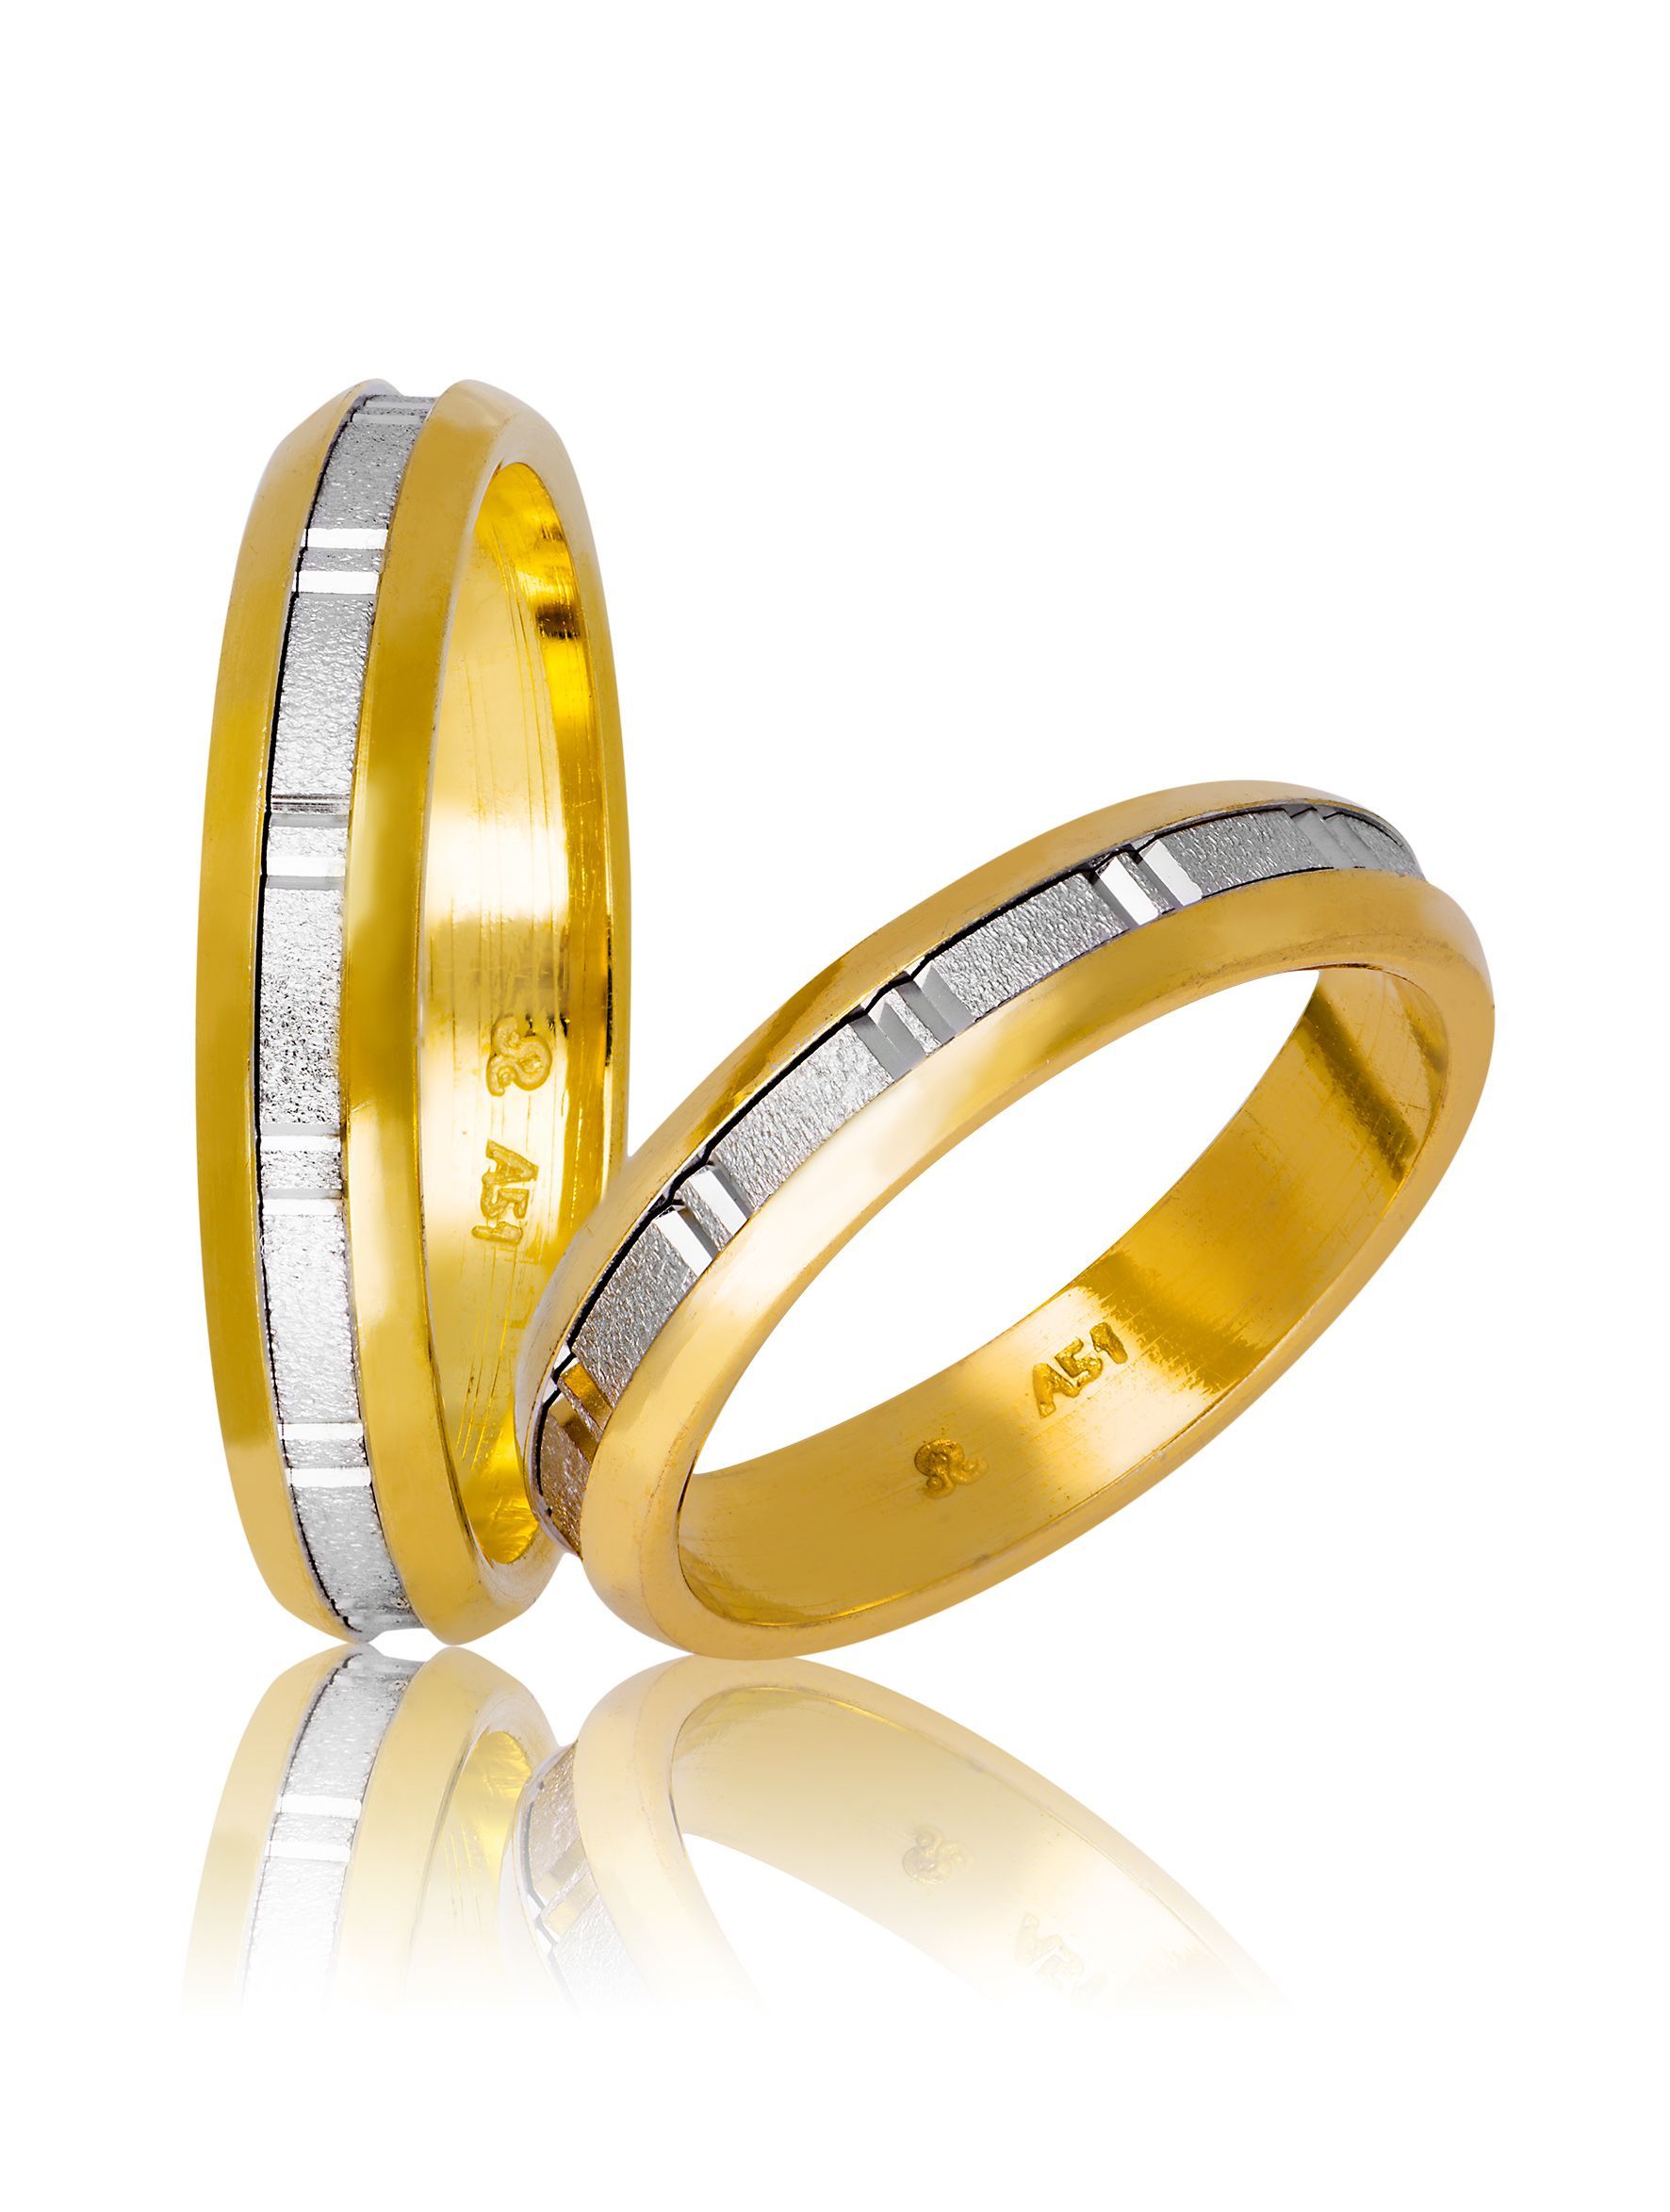 White gold & gold wedding rings 4.3mm (code 718)